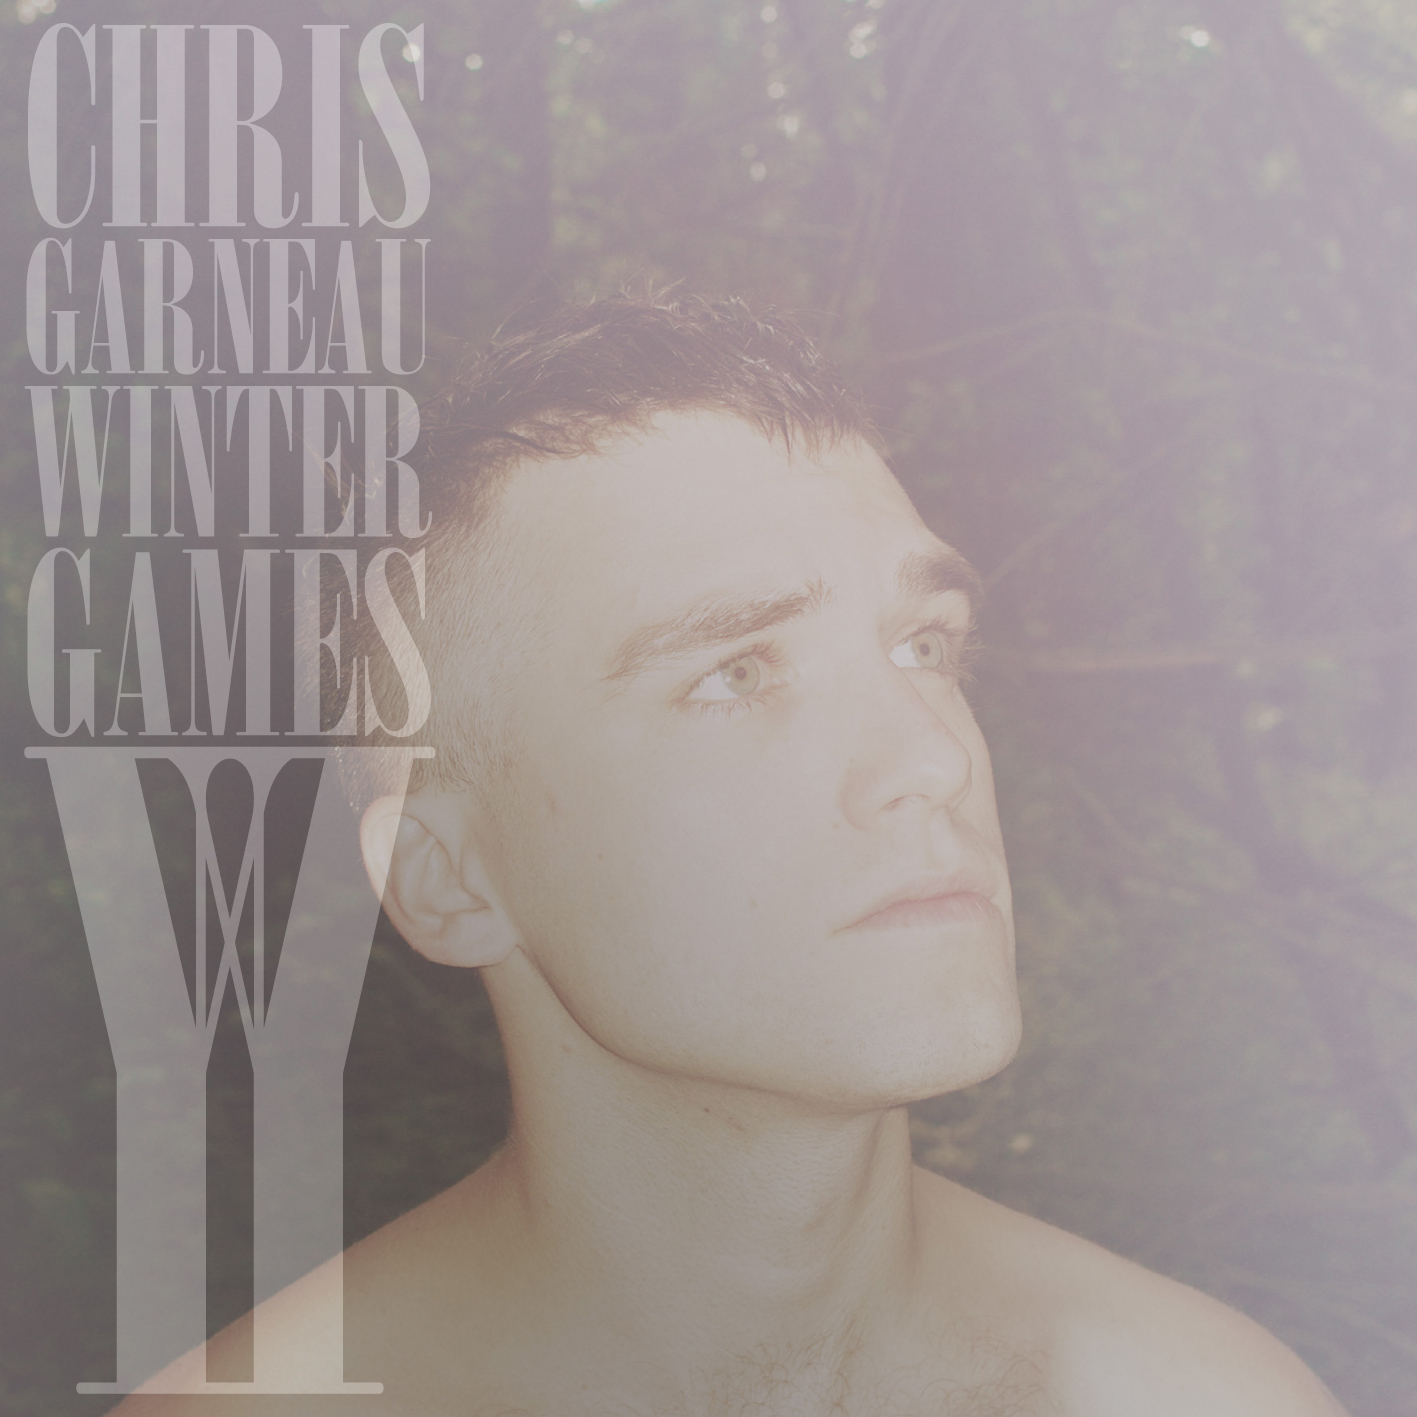 CHRIS GARNEAU – Winter Games